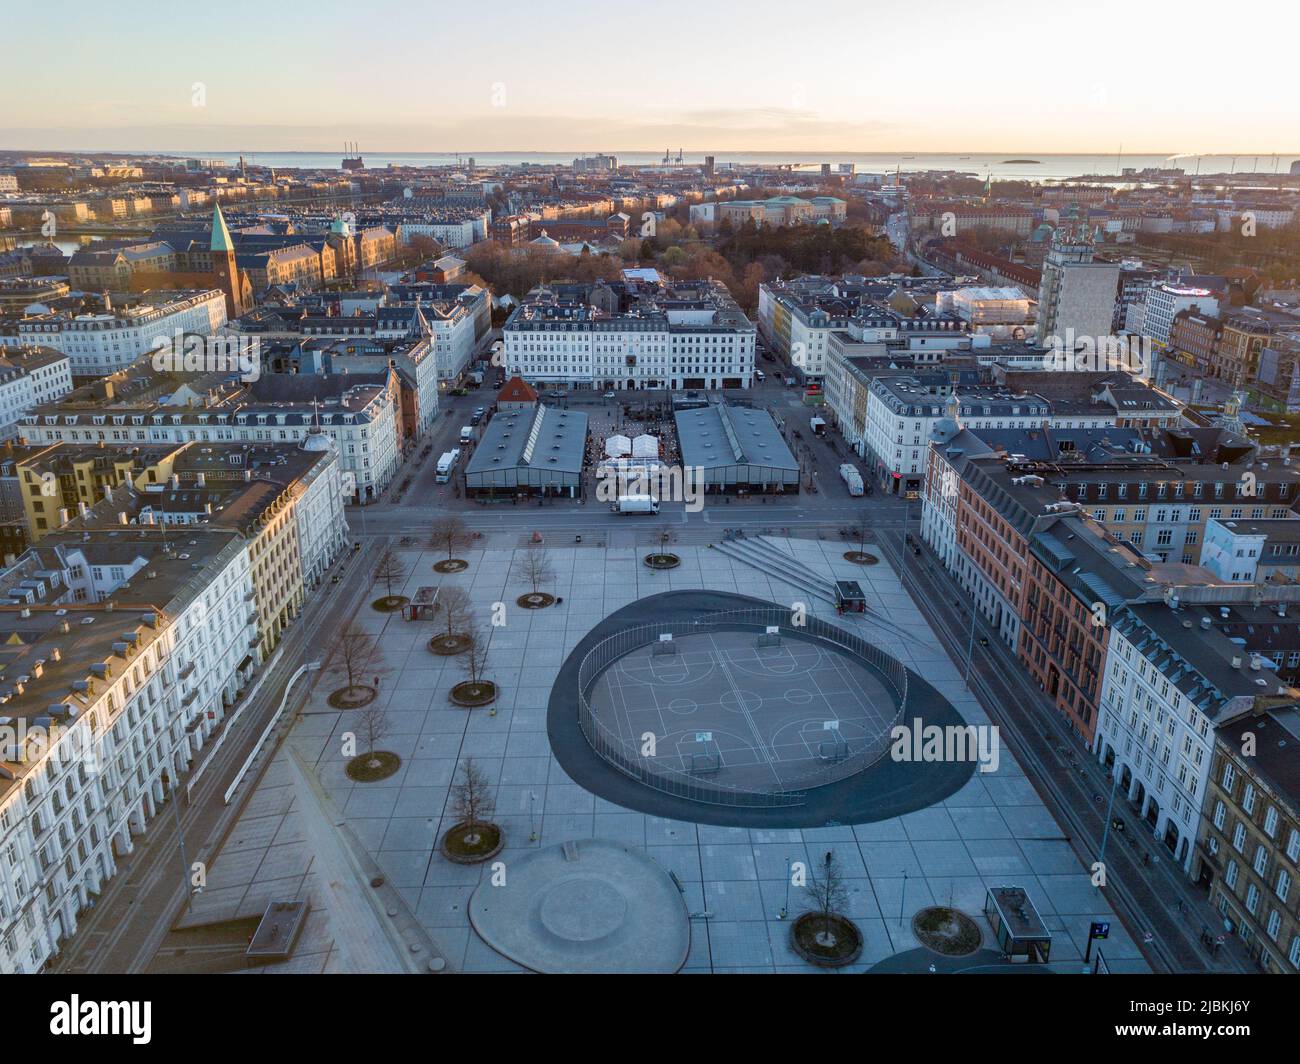 Israels Plads in Copenhagen, Denmark Stock Photo